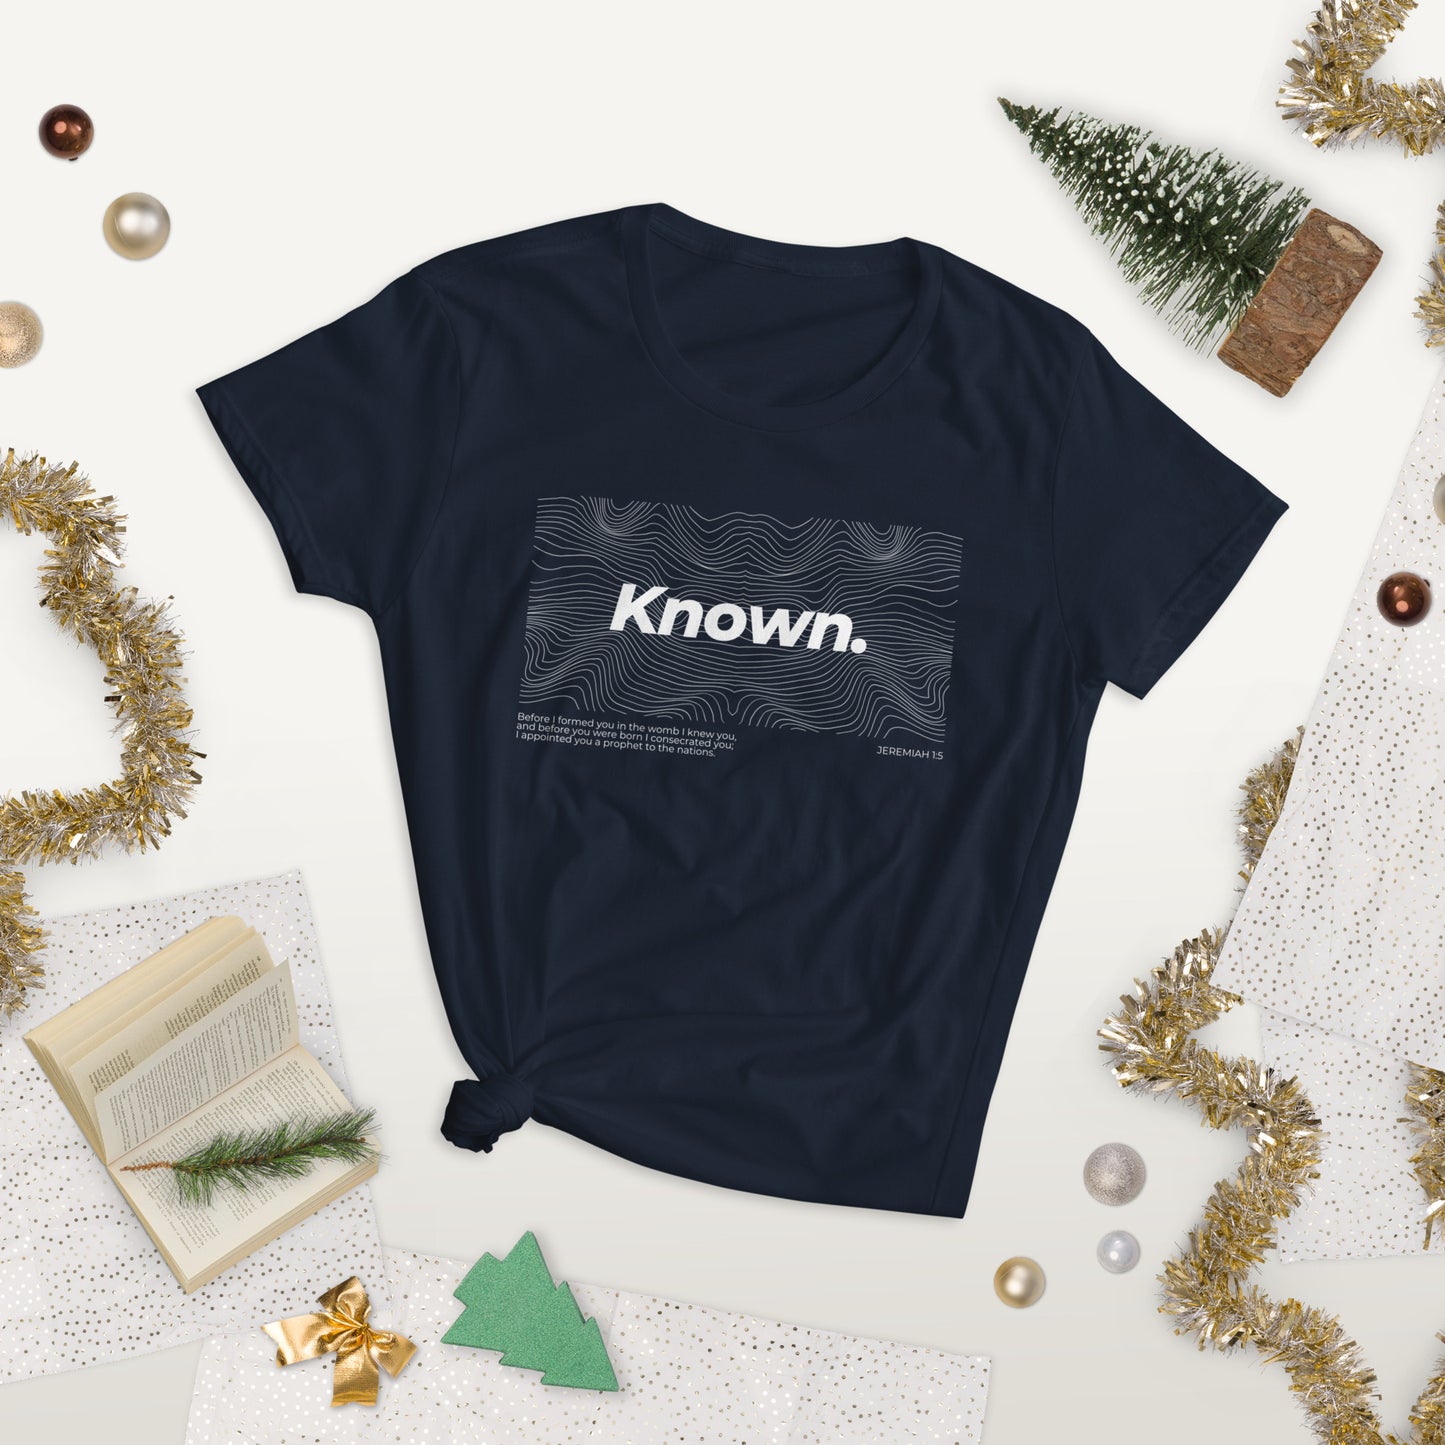 "Known" - Women's short sleeve t-shirt